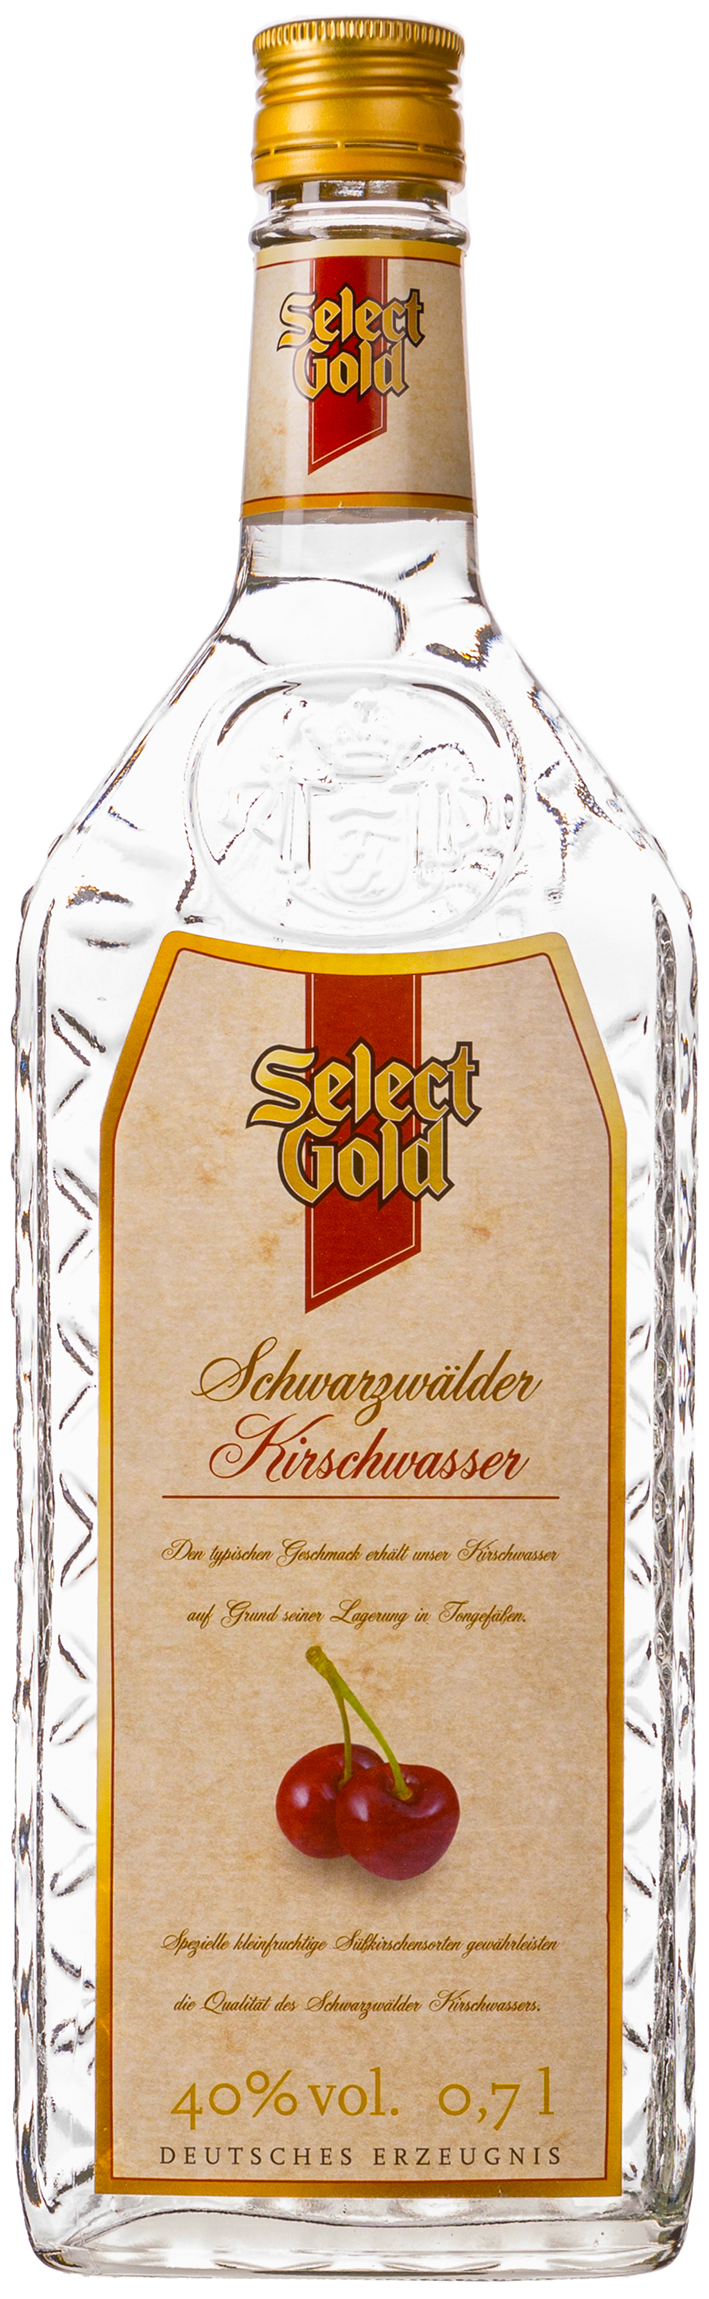 Select Gold Schwarzwälder Kirschwasser 40% 0,7L | Obstbrand & Grappa